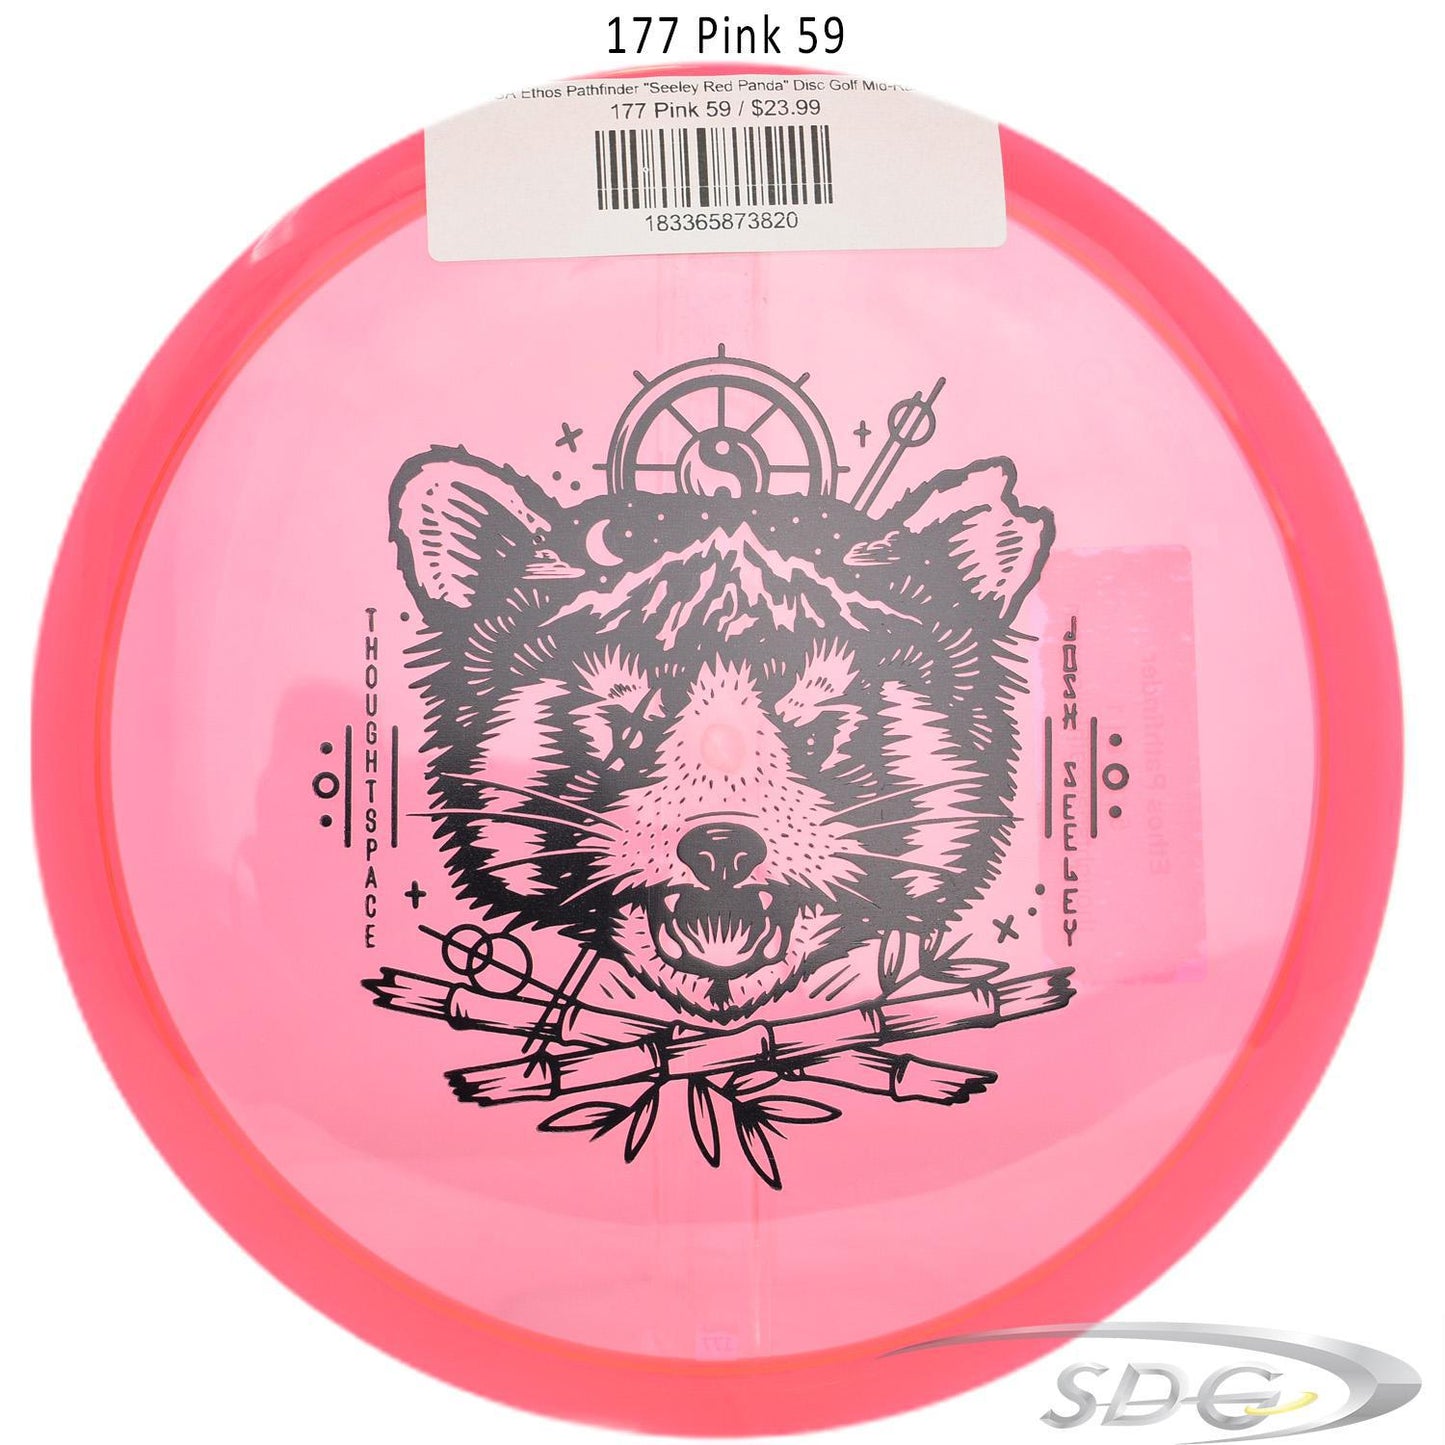 tsa-ethos-pathfinder-seeley-red-panda-disc-golf-mid-range 177 Pink 59 